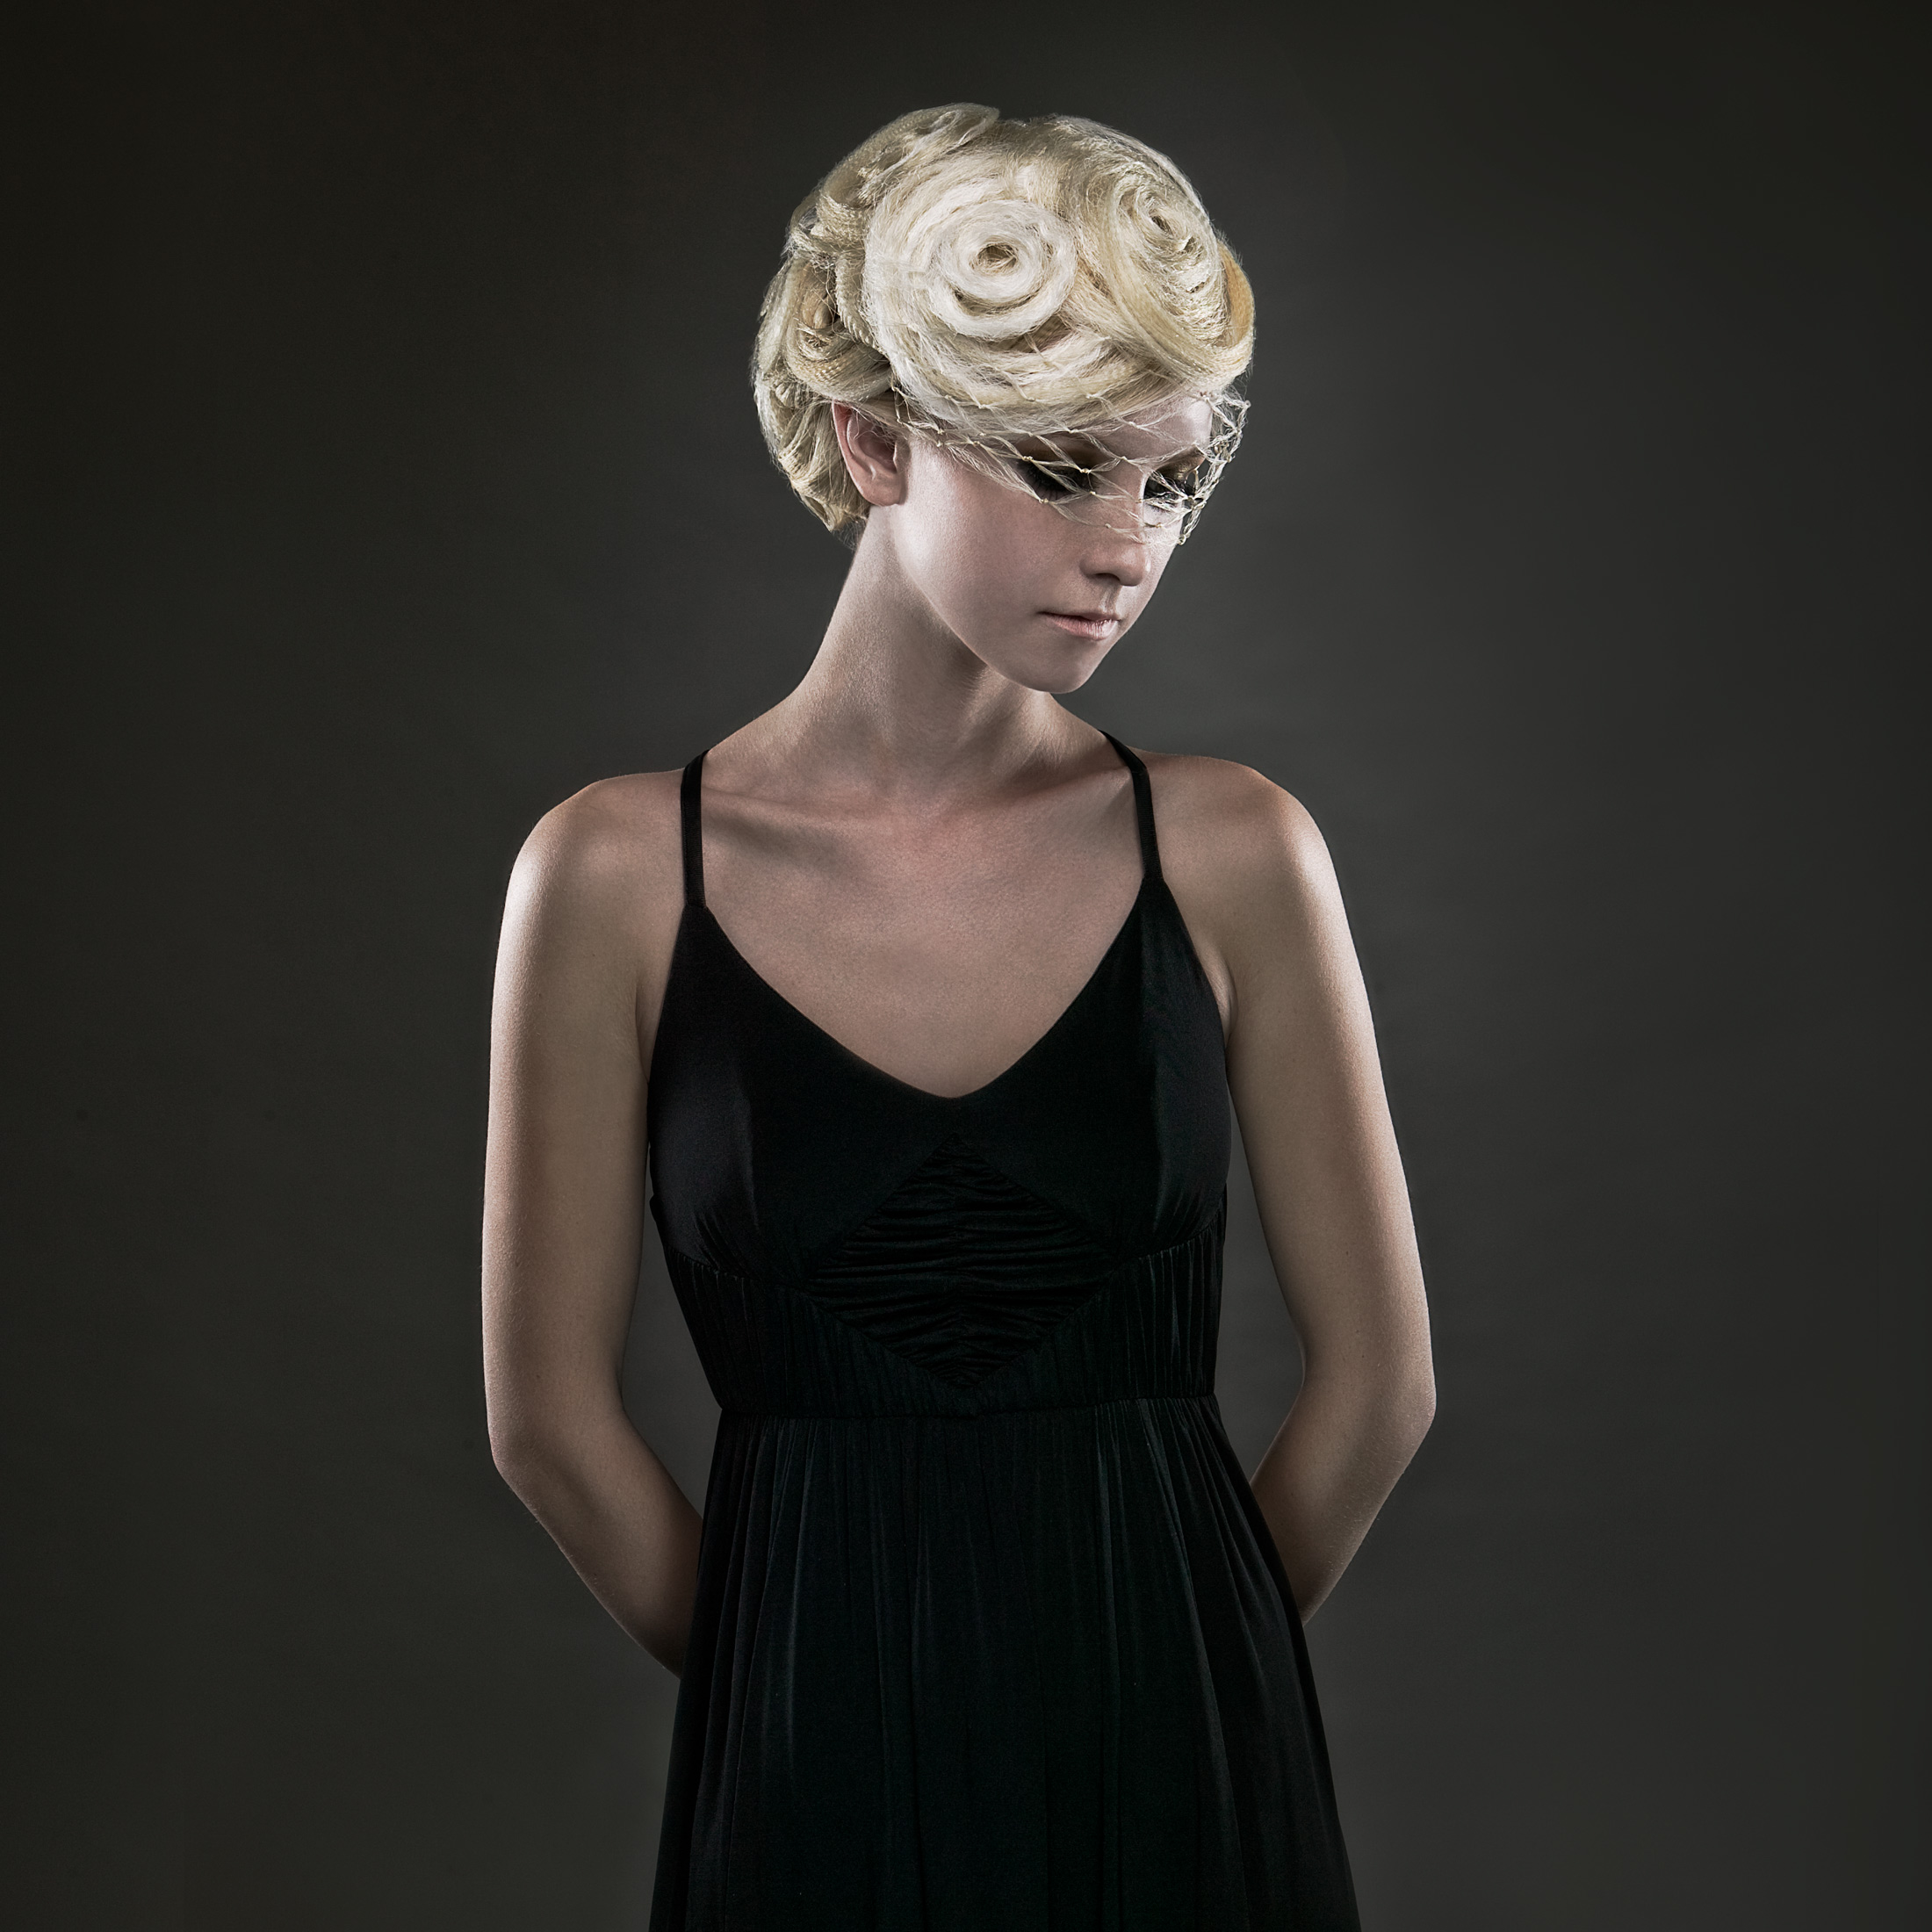 Fashion Beauty Portrait | Dovis Bird Agency Photography